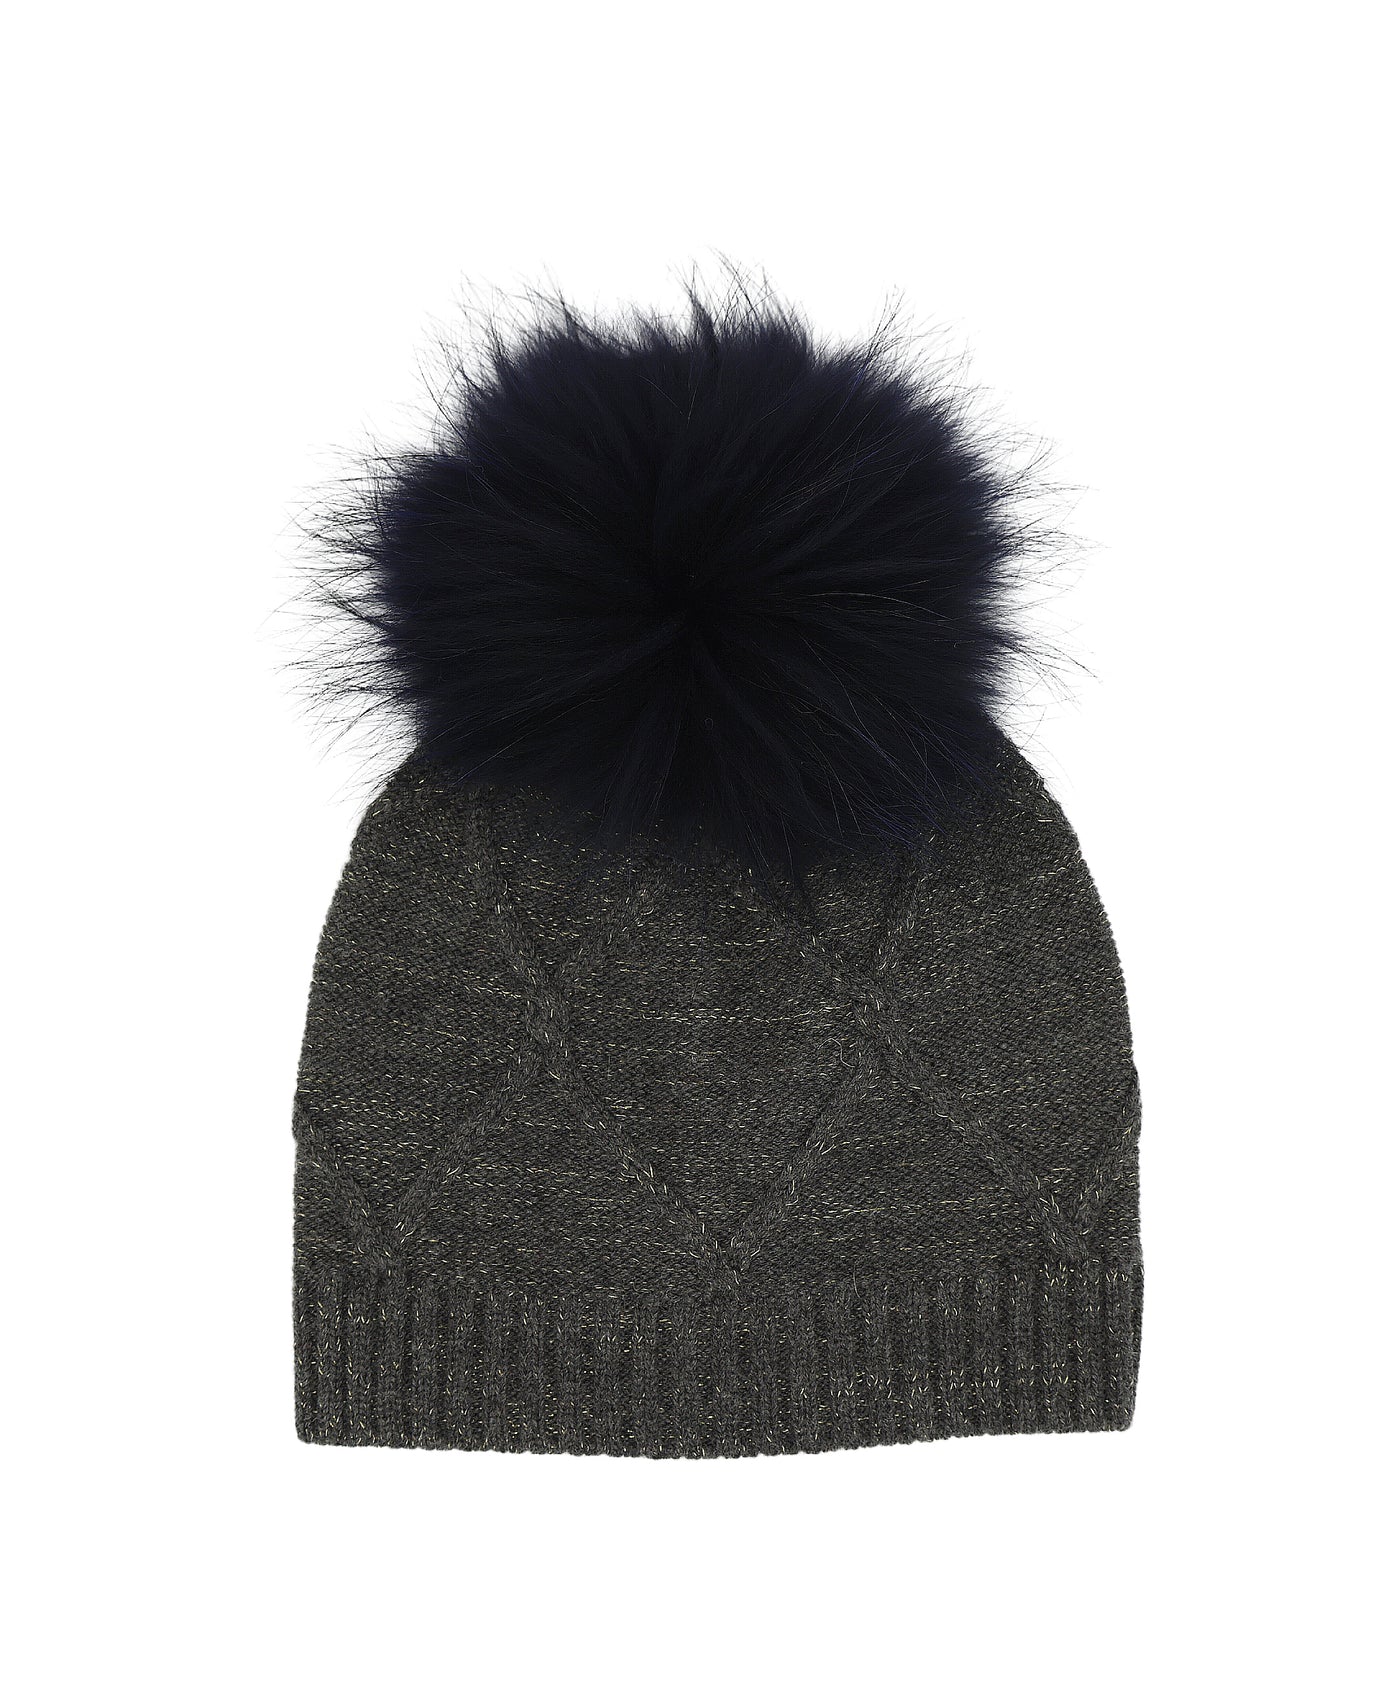 Quilted Knit Hat w/ Lurex & Fur Pom image 1